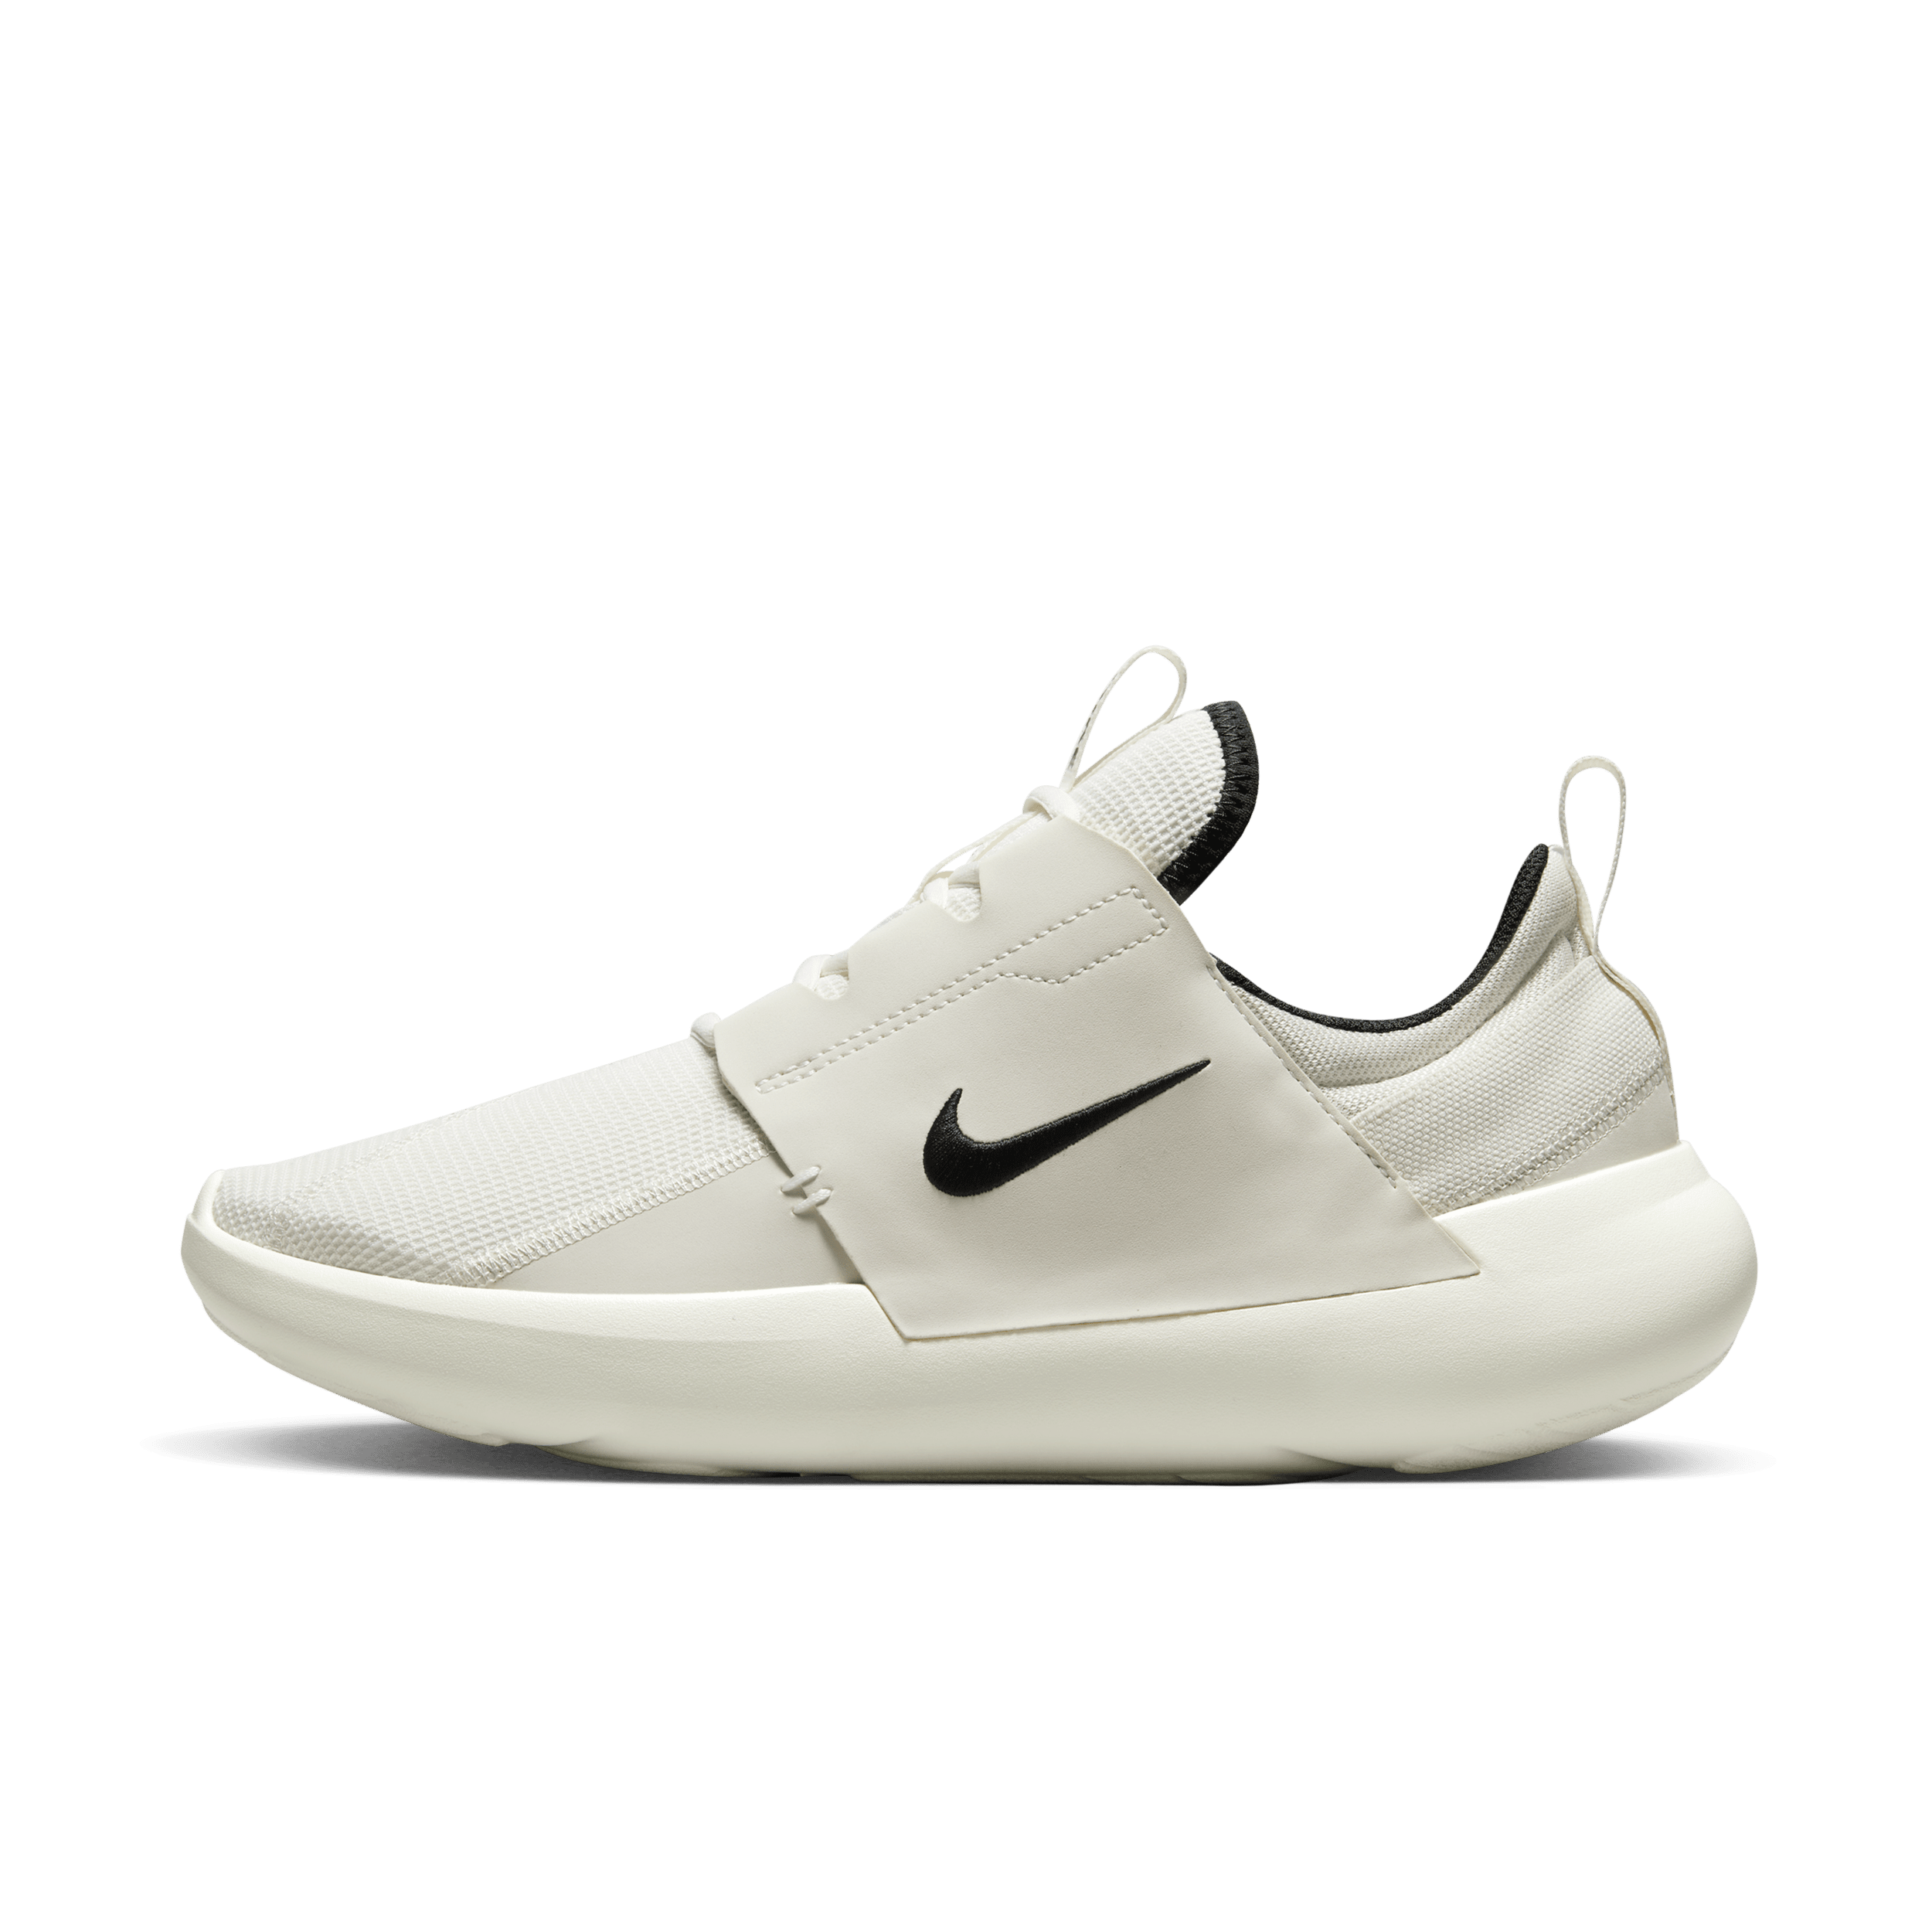 Nike E-Series AD herenschoenen – Wit